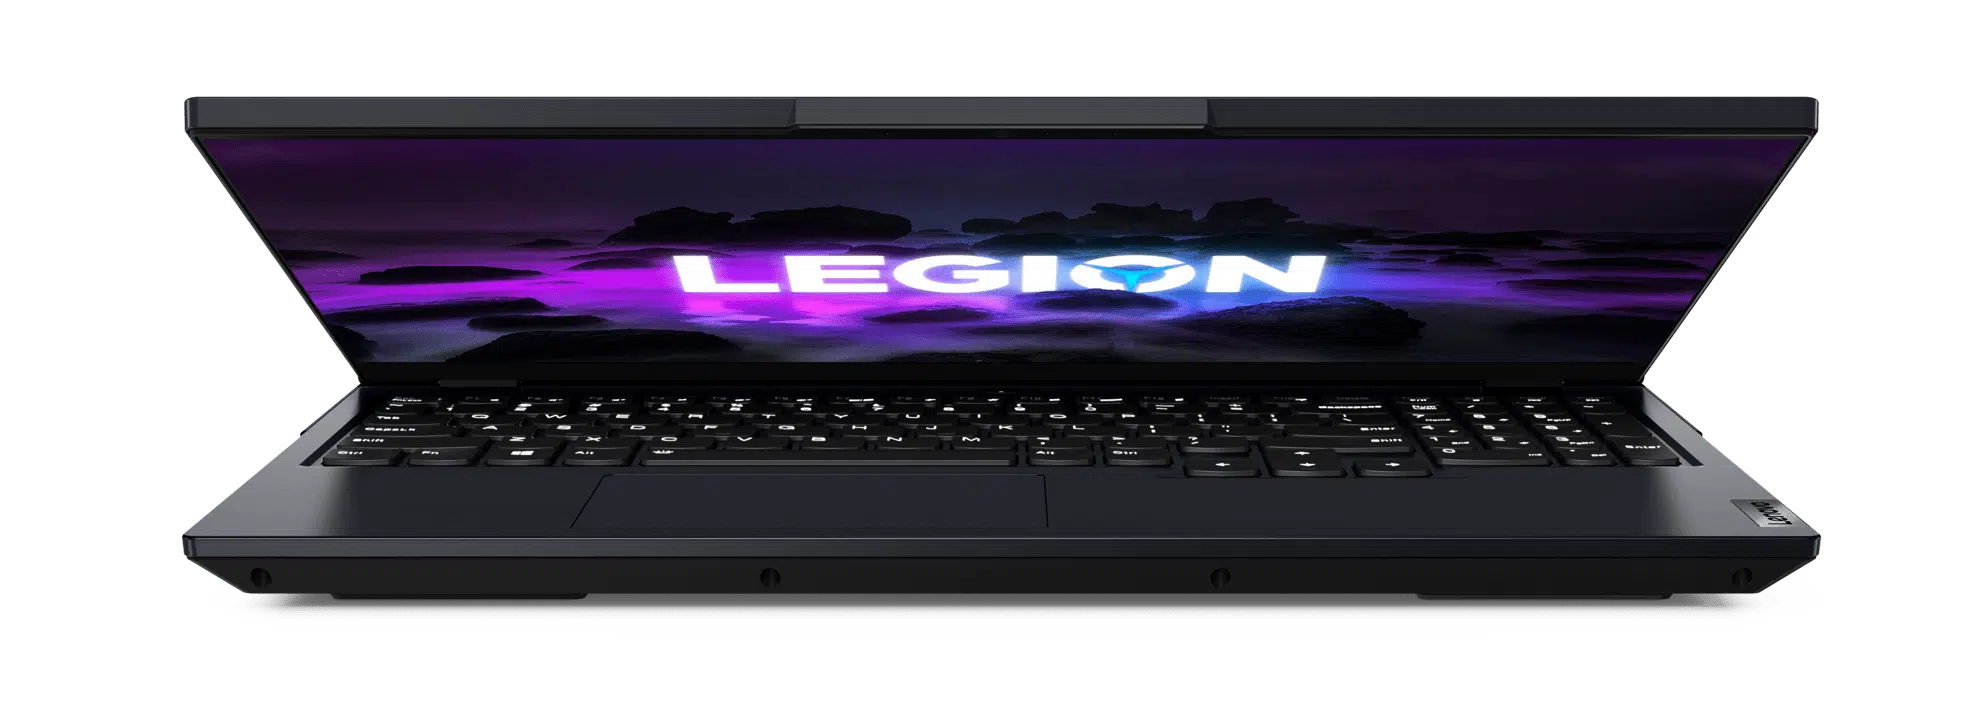 Lenovc Legion 5